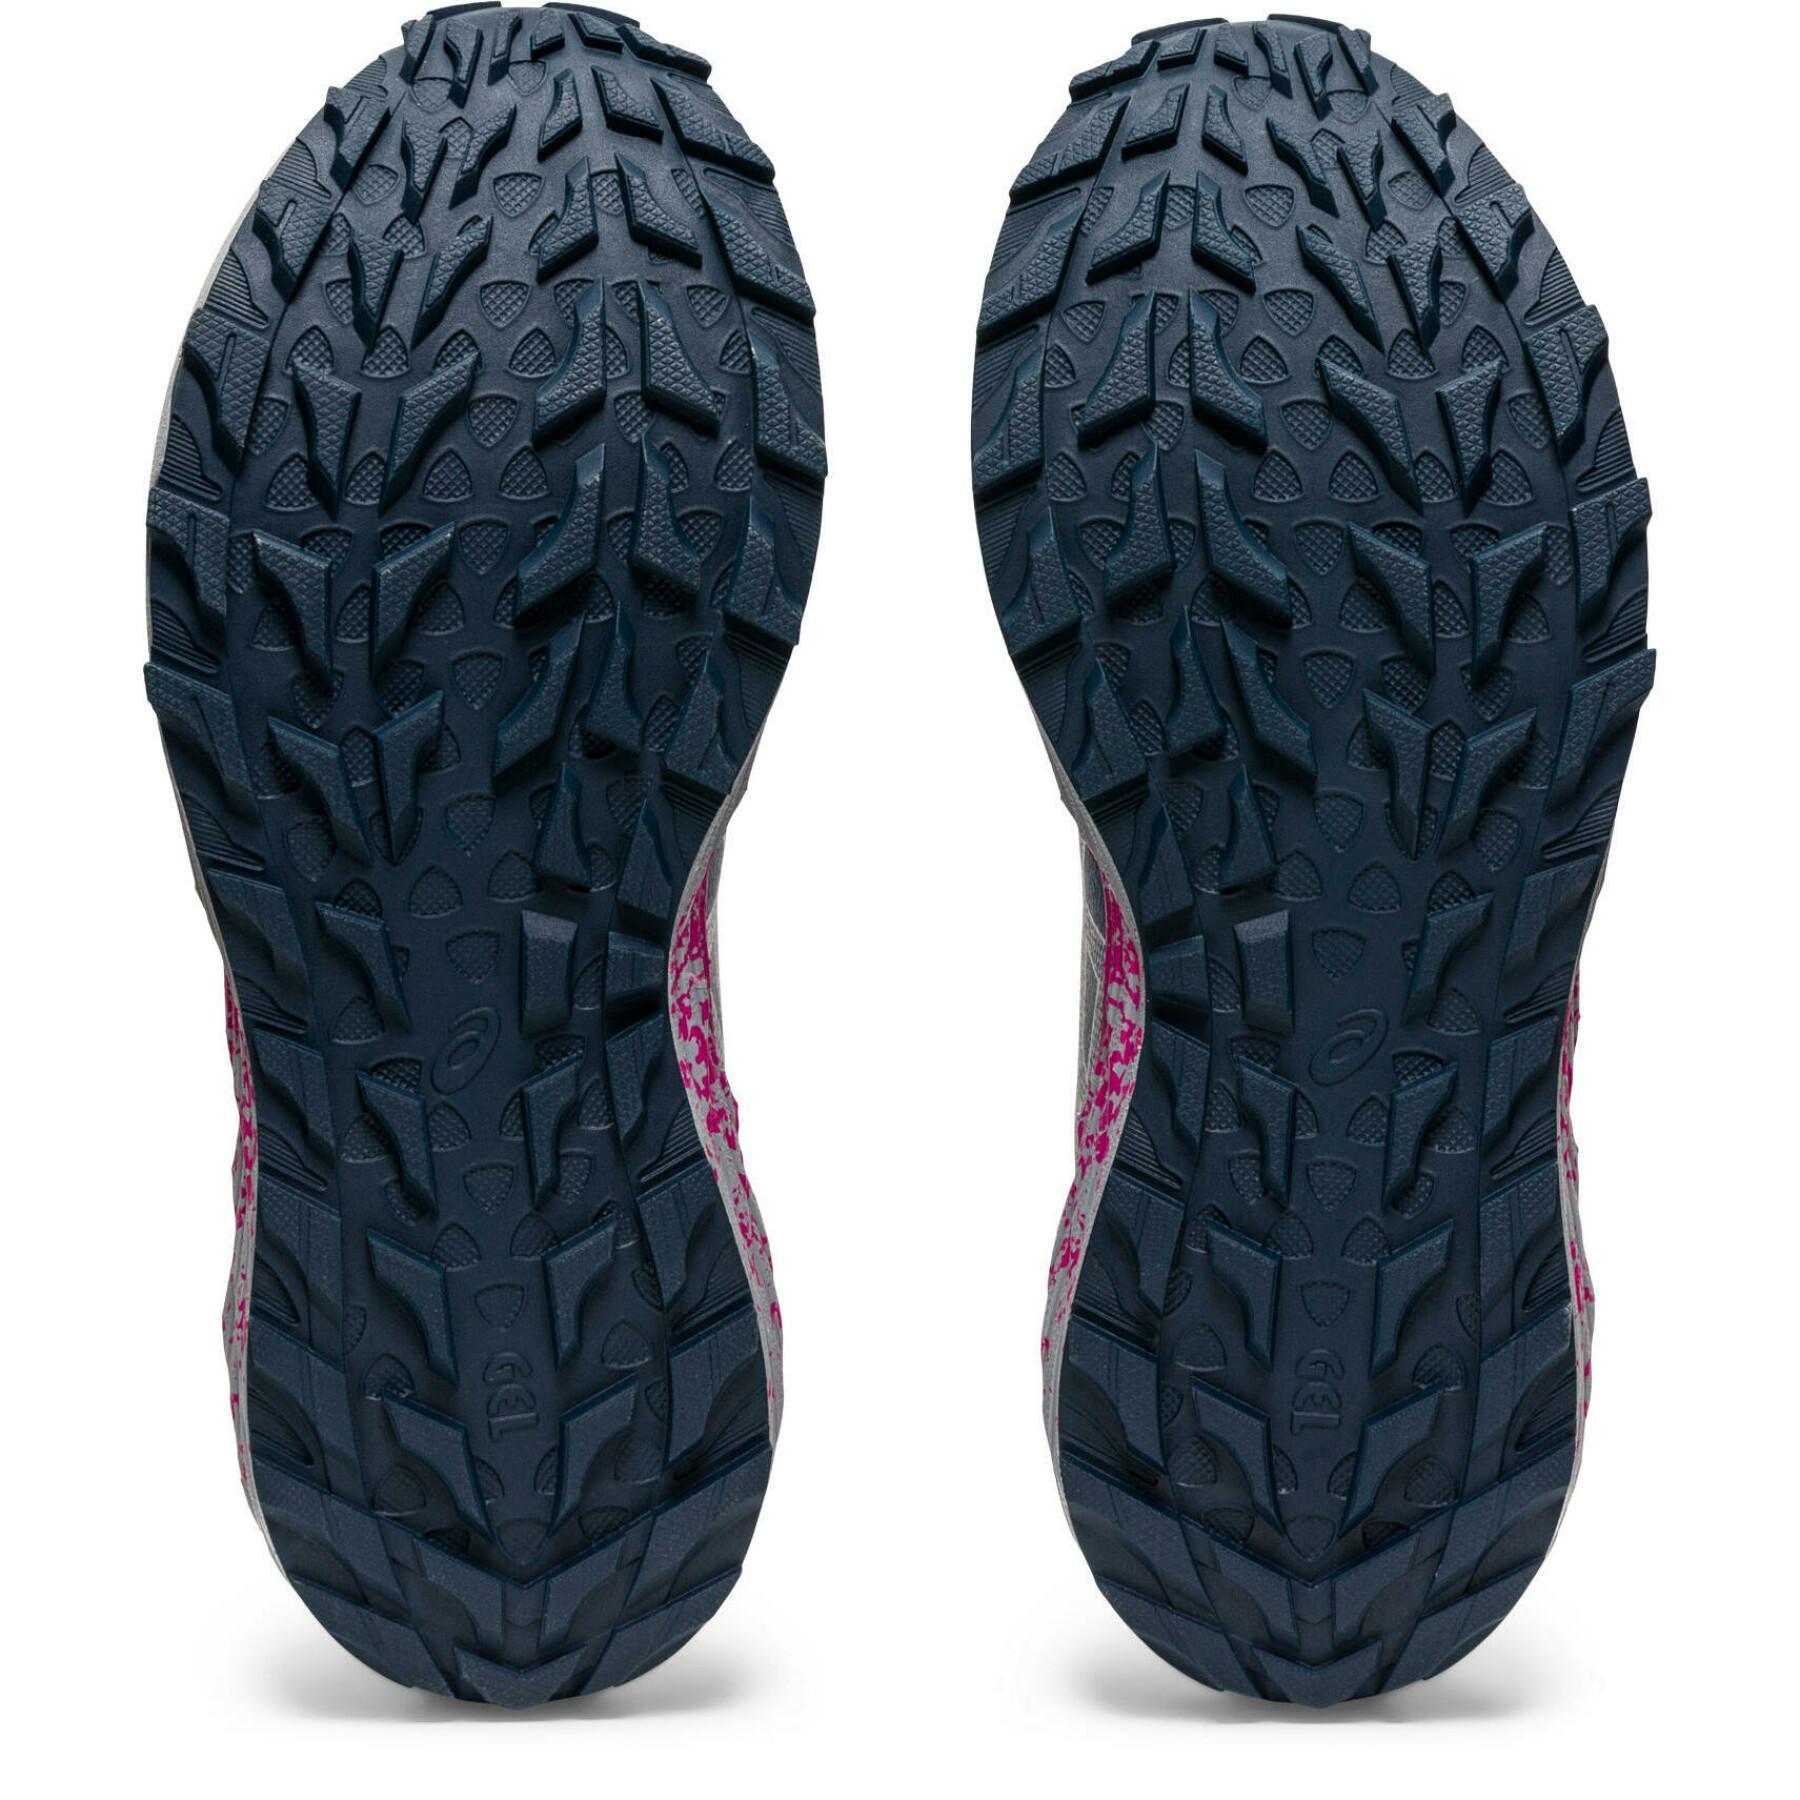 Schuhe für Frauen Asics Gel-Trabuco Terra